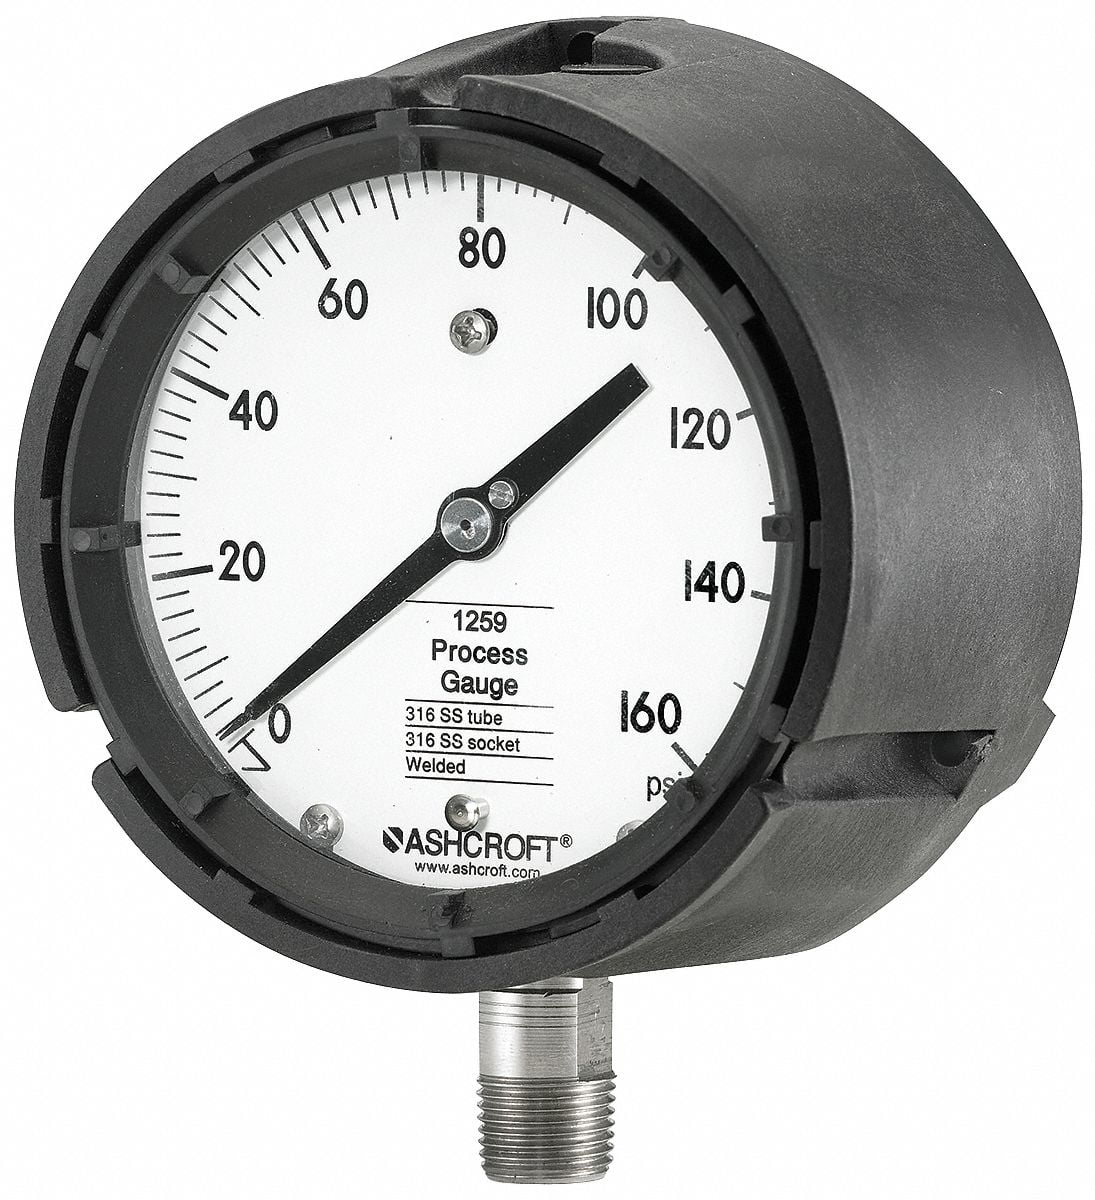 Gas Ashcroft USA MADE 160 psi industrial gauge Air Compressor Regulator 